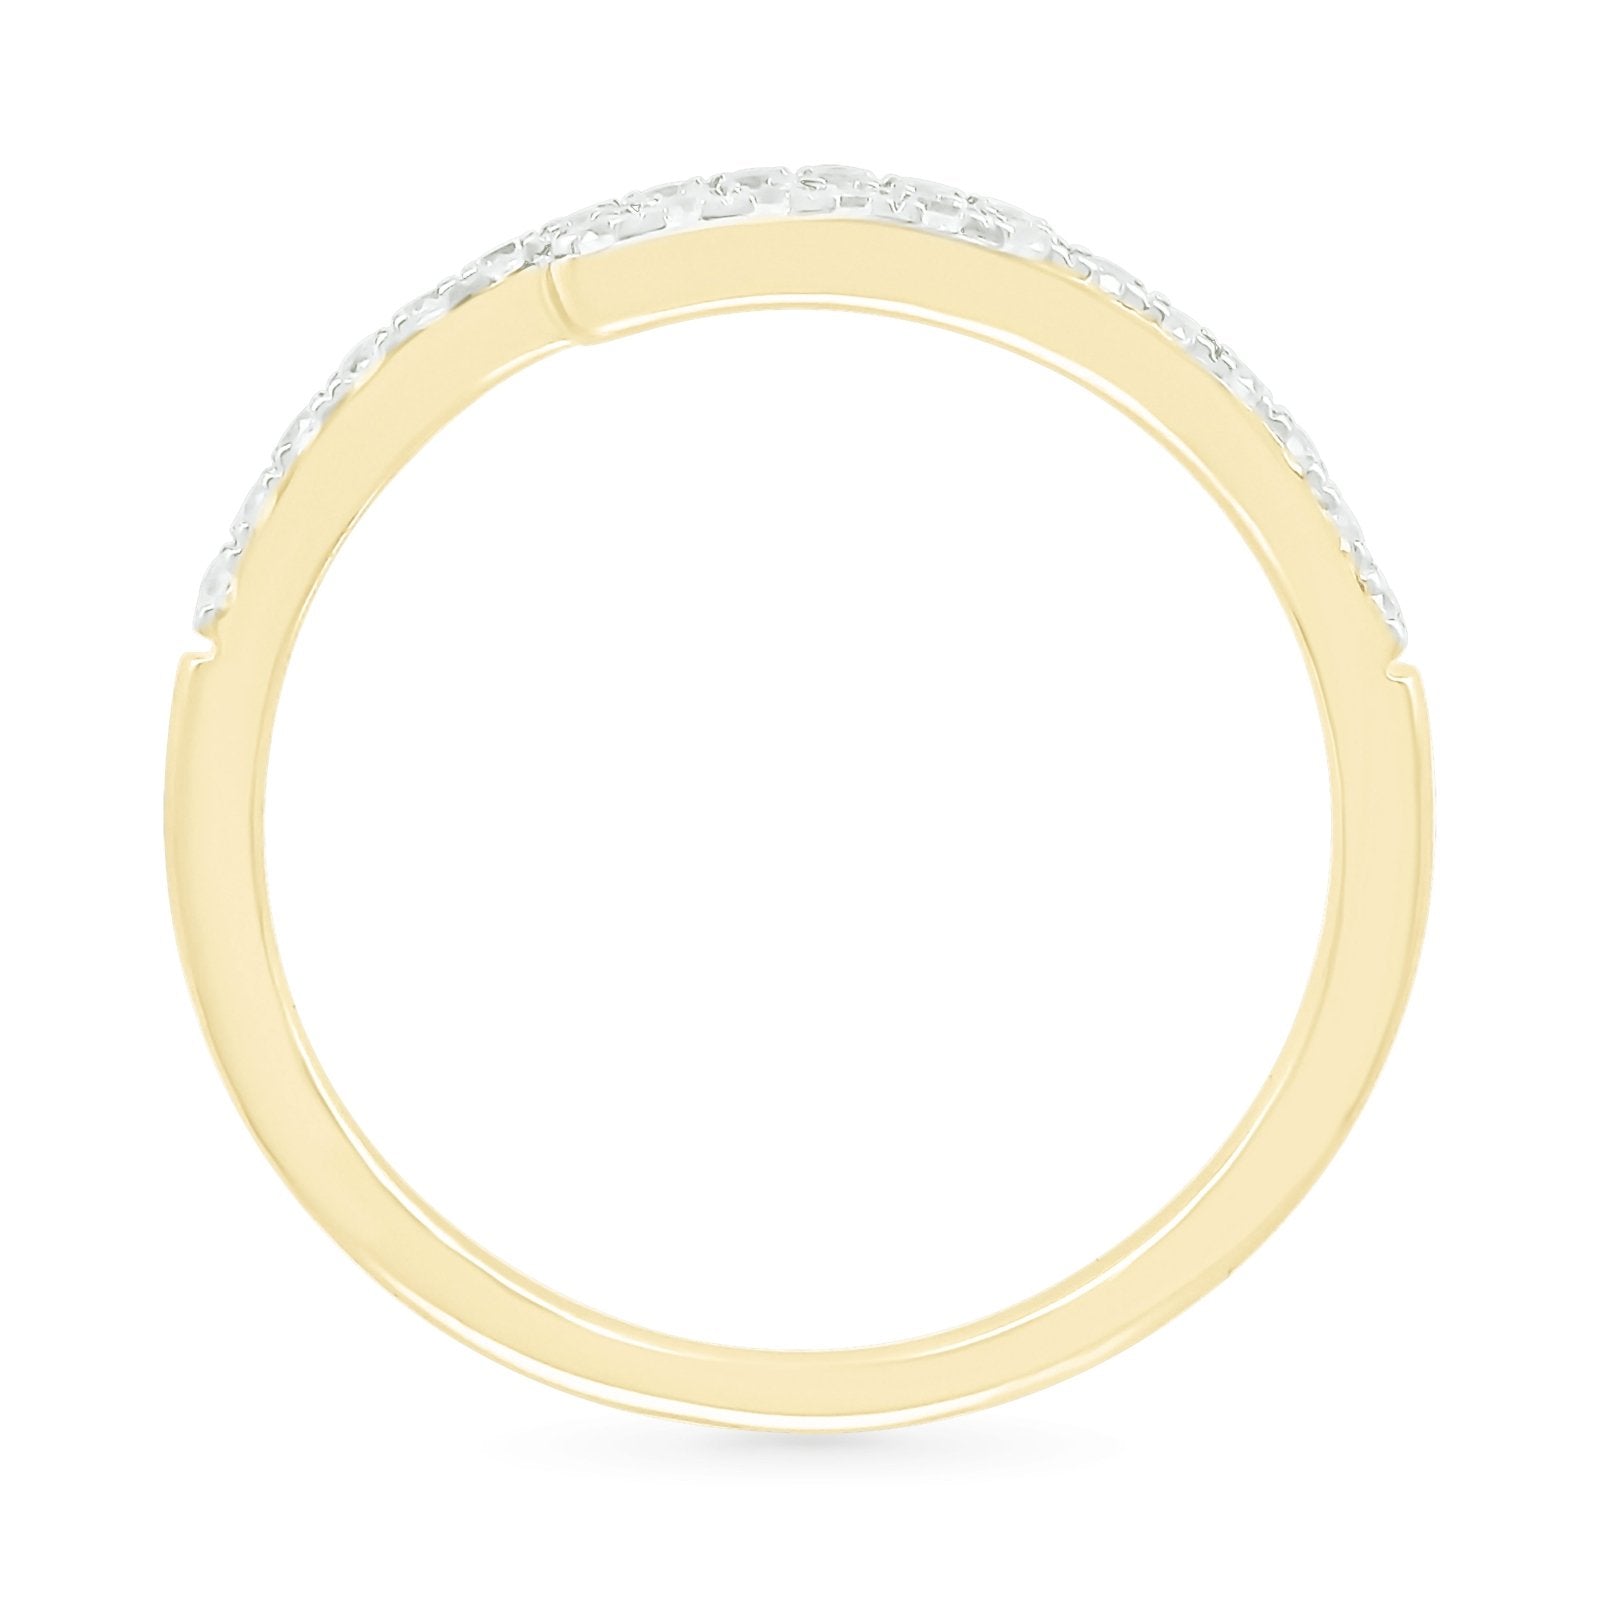 Wraparound Diamond Band Rings Estella Collection #product_description# 32754 Diamond Made to Order Yellow Gold #tag4# #tag5# #tag6# #tag7# #tag8# #tag9# #tag10#